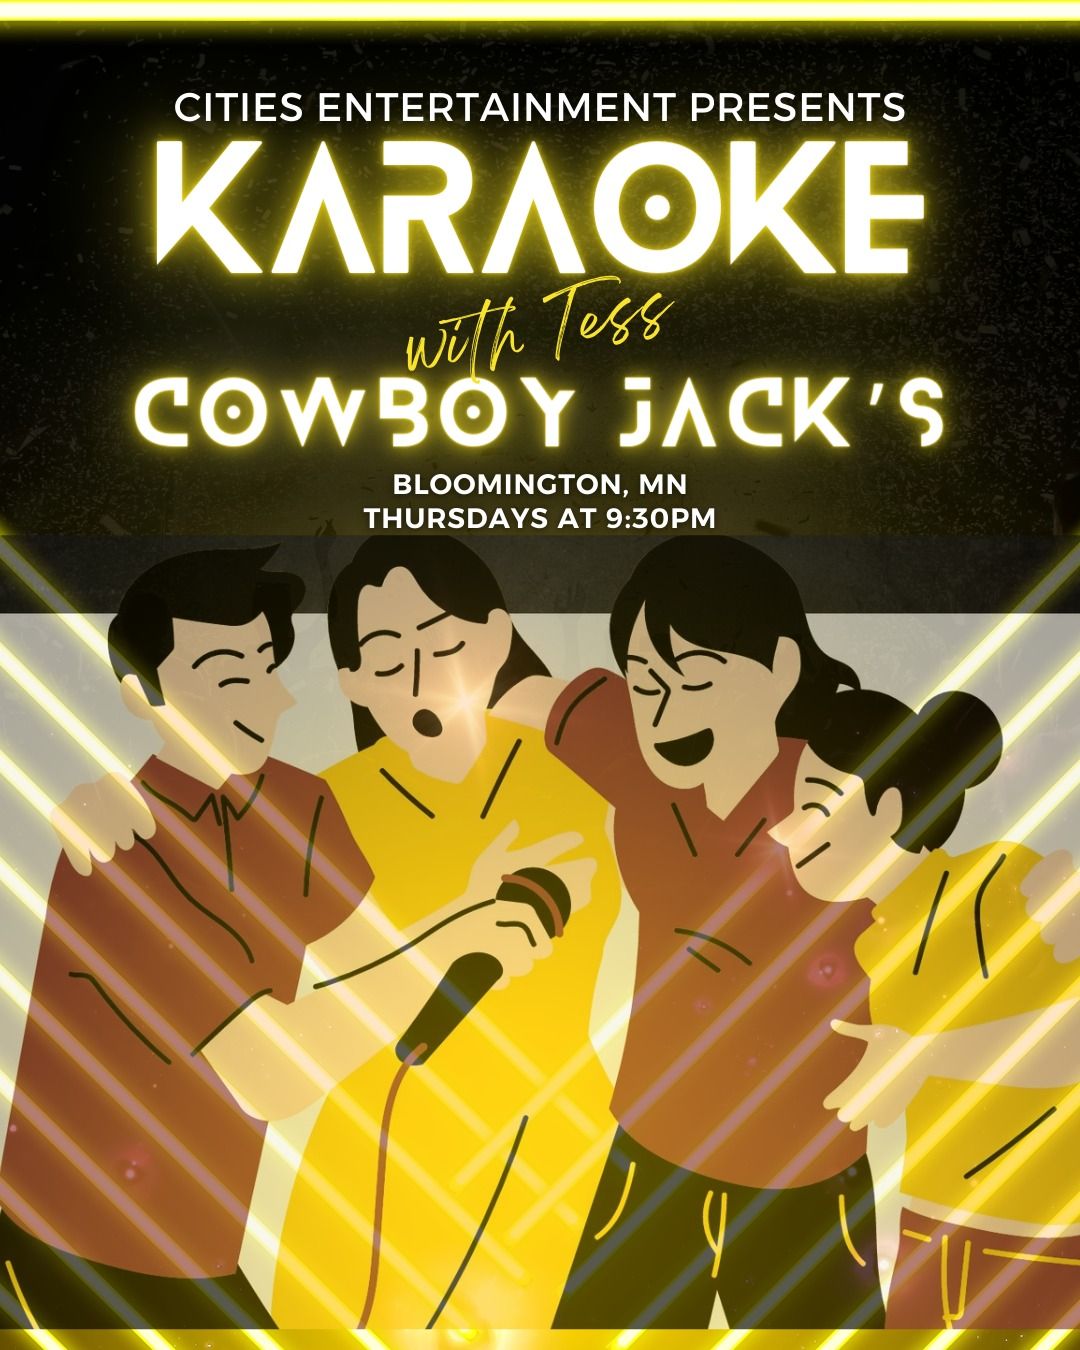 Karaoke every Thursday at Cowboy Jack's Bloomington